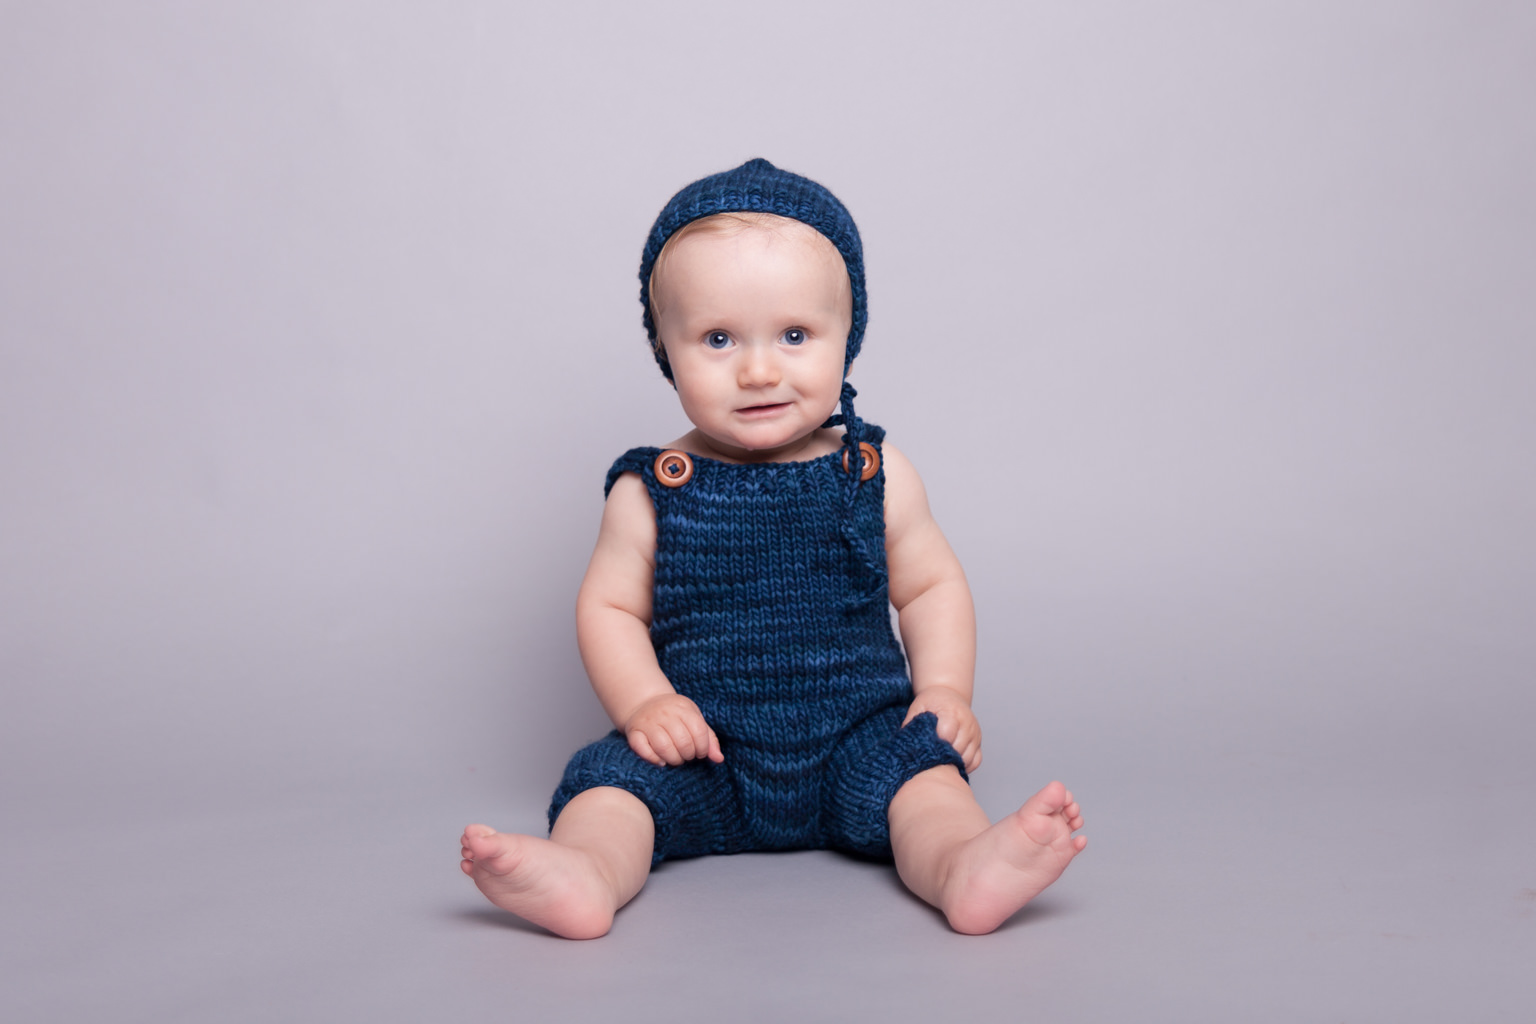 baby photographer edinburgh, professional baby photographs by beautiful bairns photography